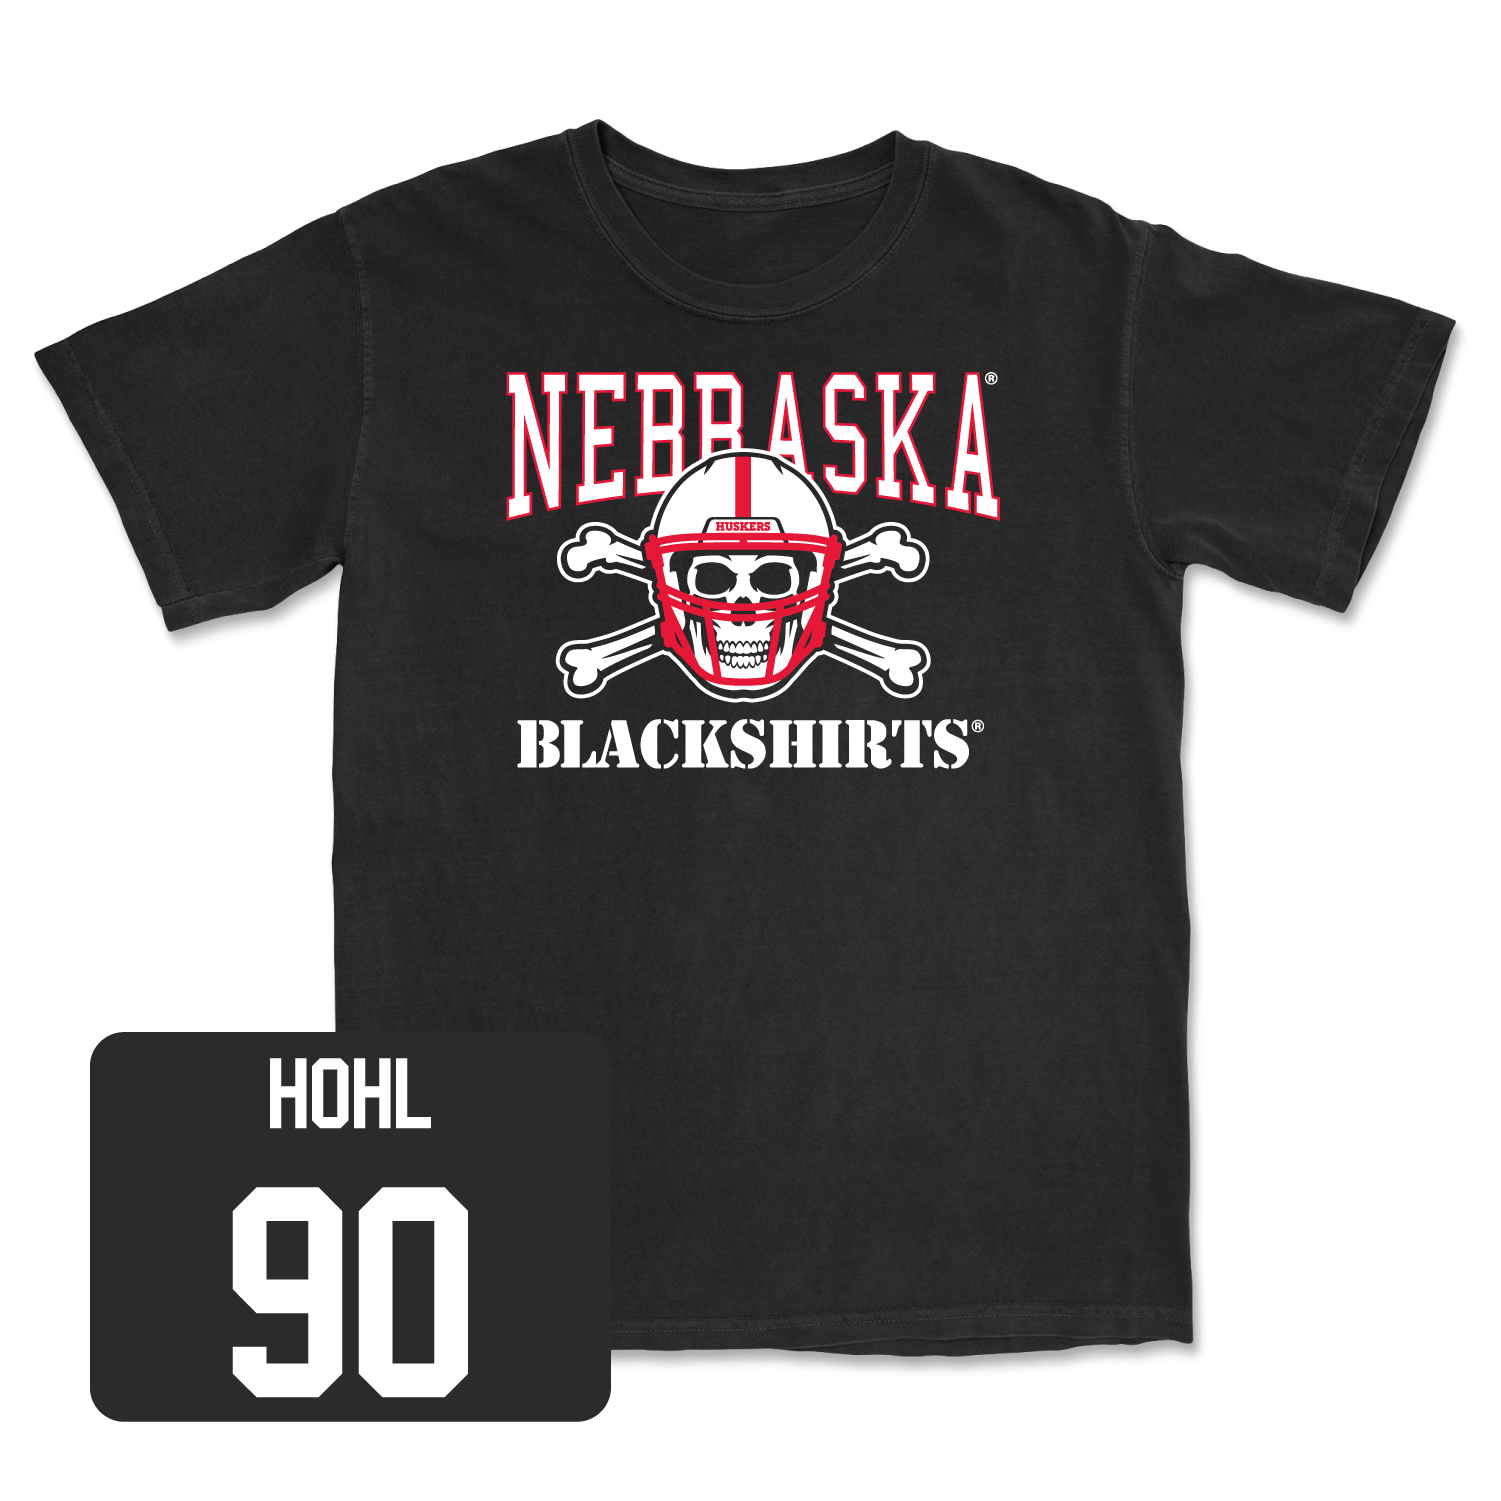 Black Football Blackshirts Tee Small / Jacob Hohl | #90